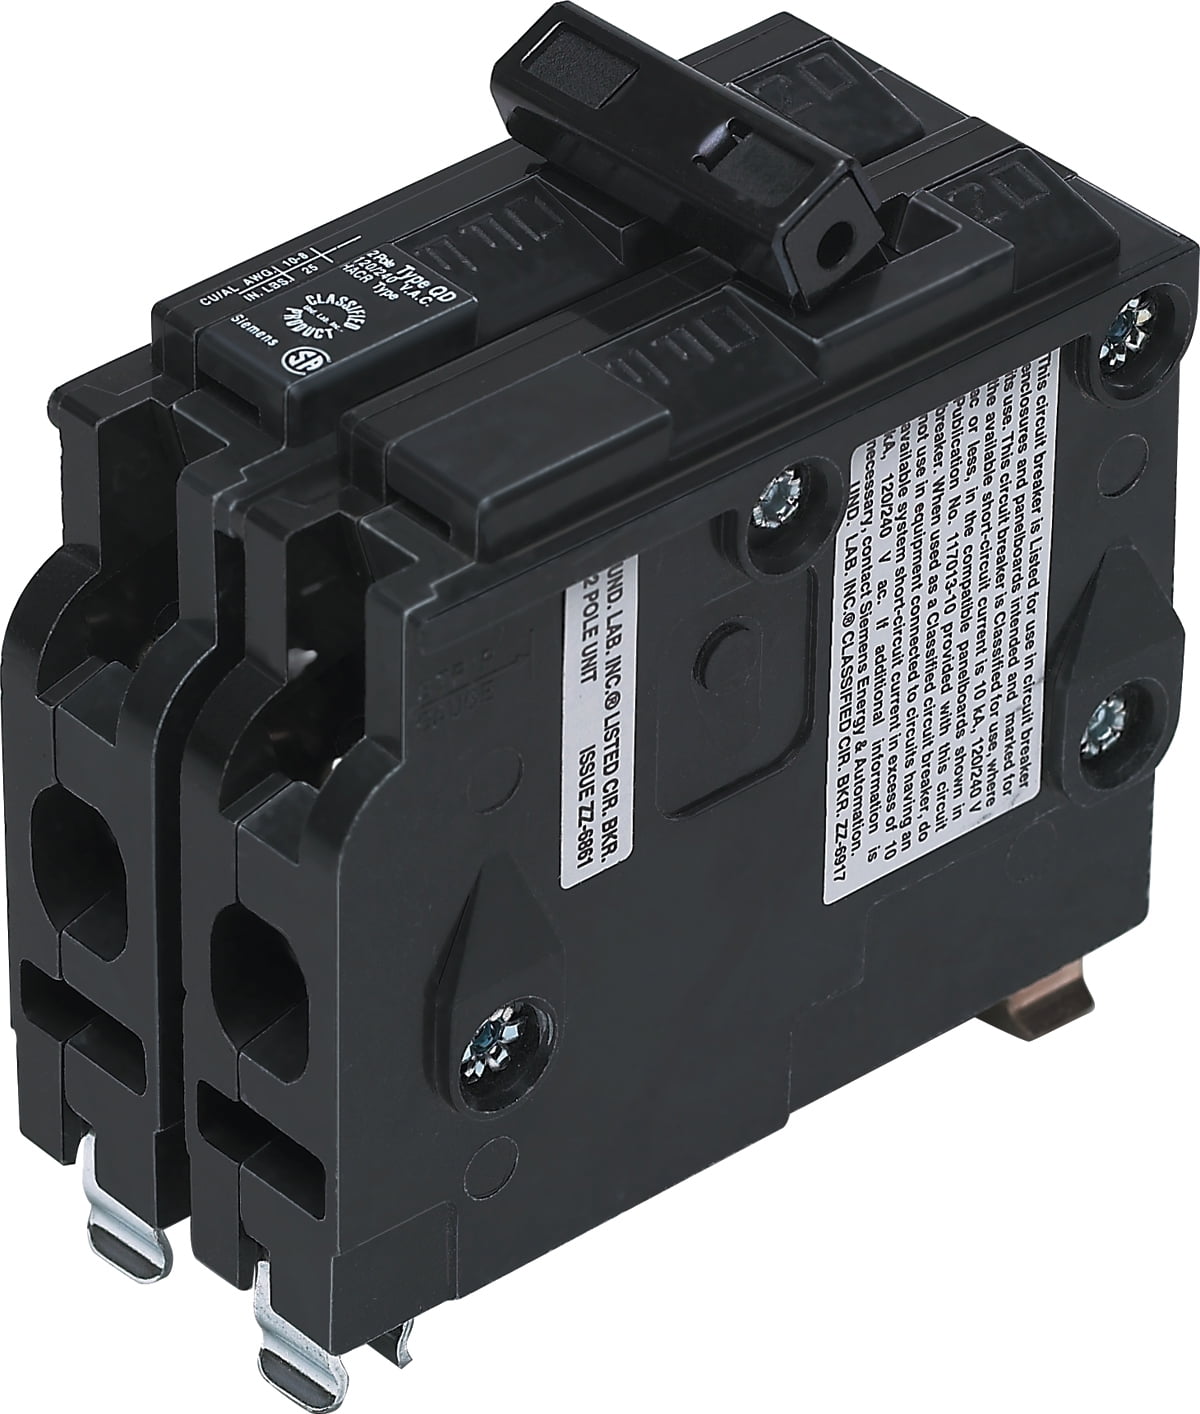 Siemens Parallax Power Components ITEQ3020 30/20a Duplex Circuit Breaker Black for sale online 